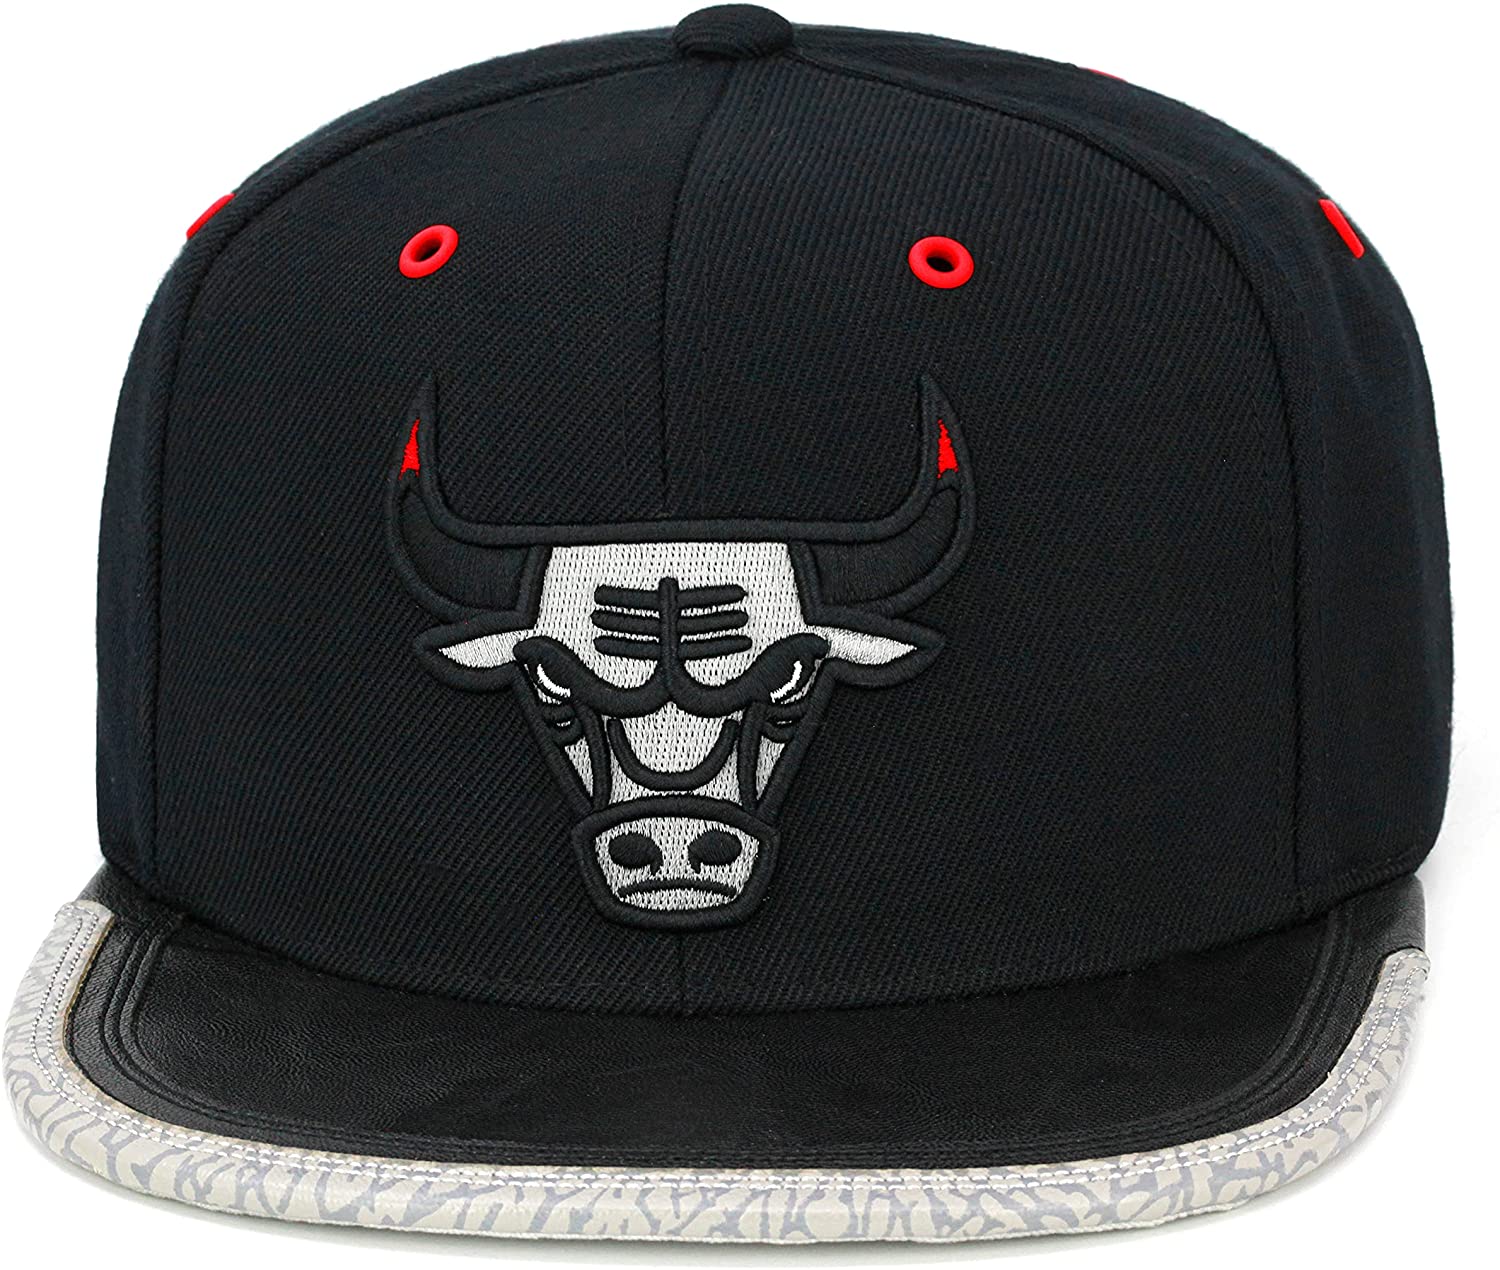 Vintage Snapback Hat New Era Chicago Bulls Hat - Size 7 1 / 4